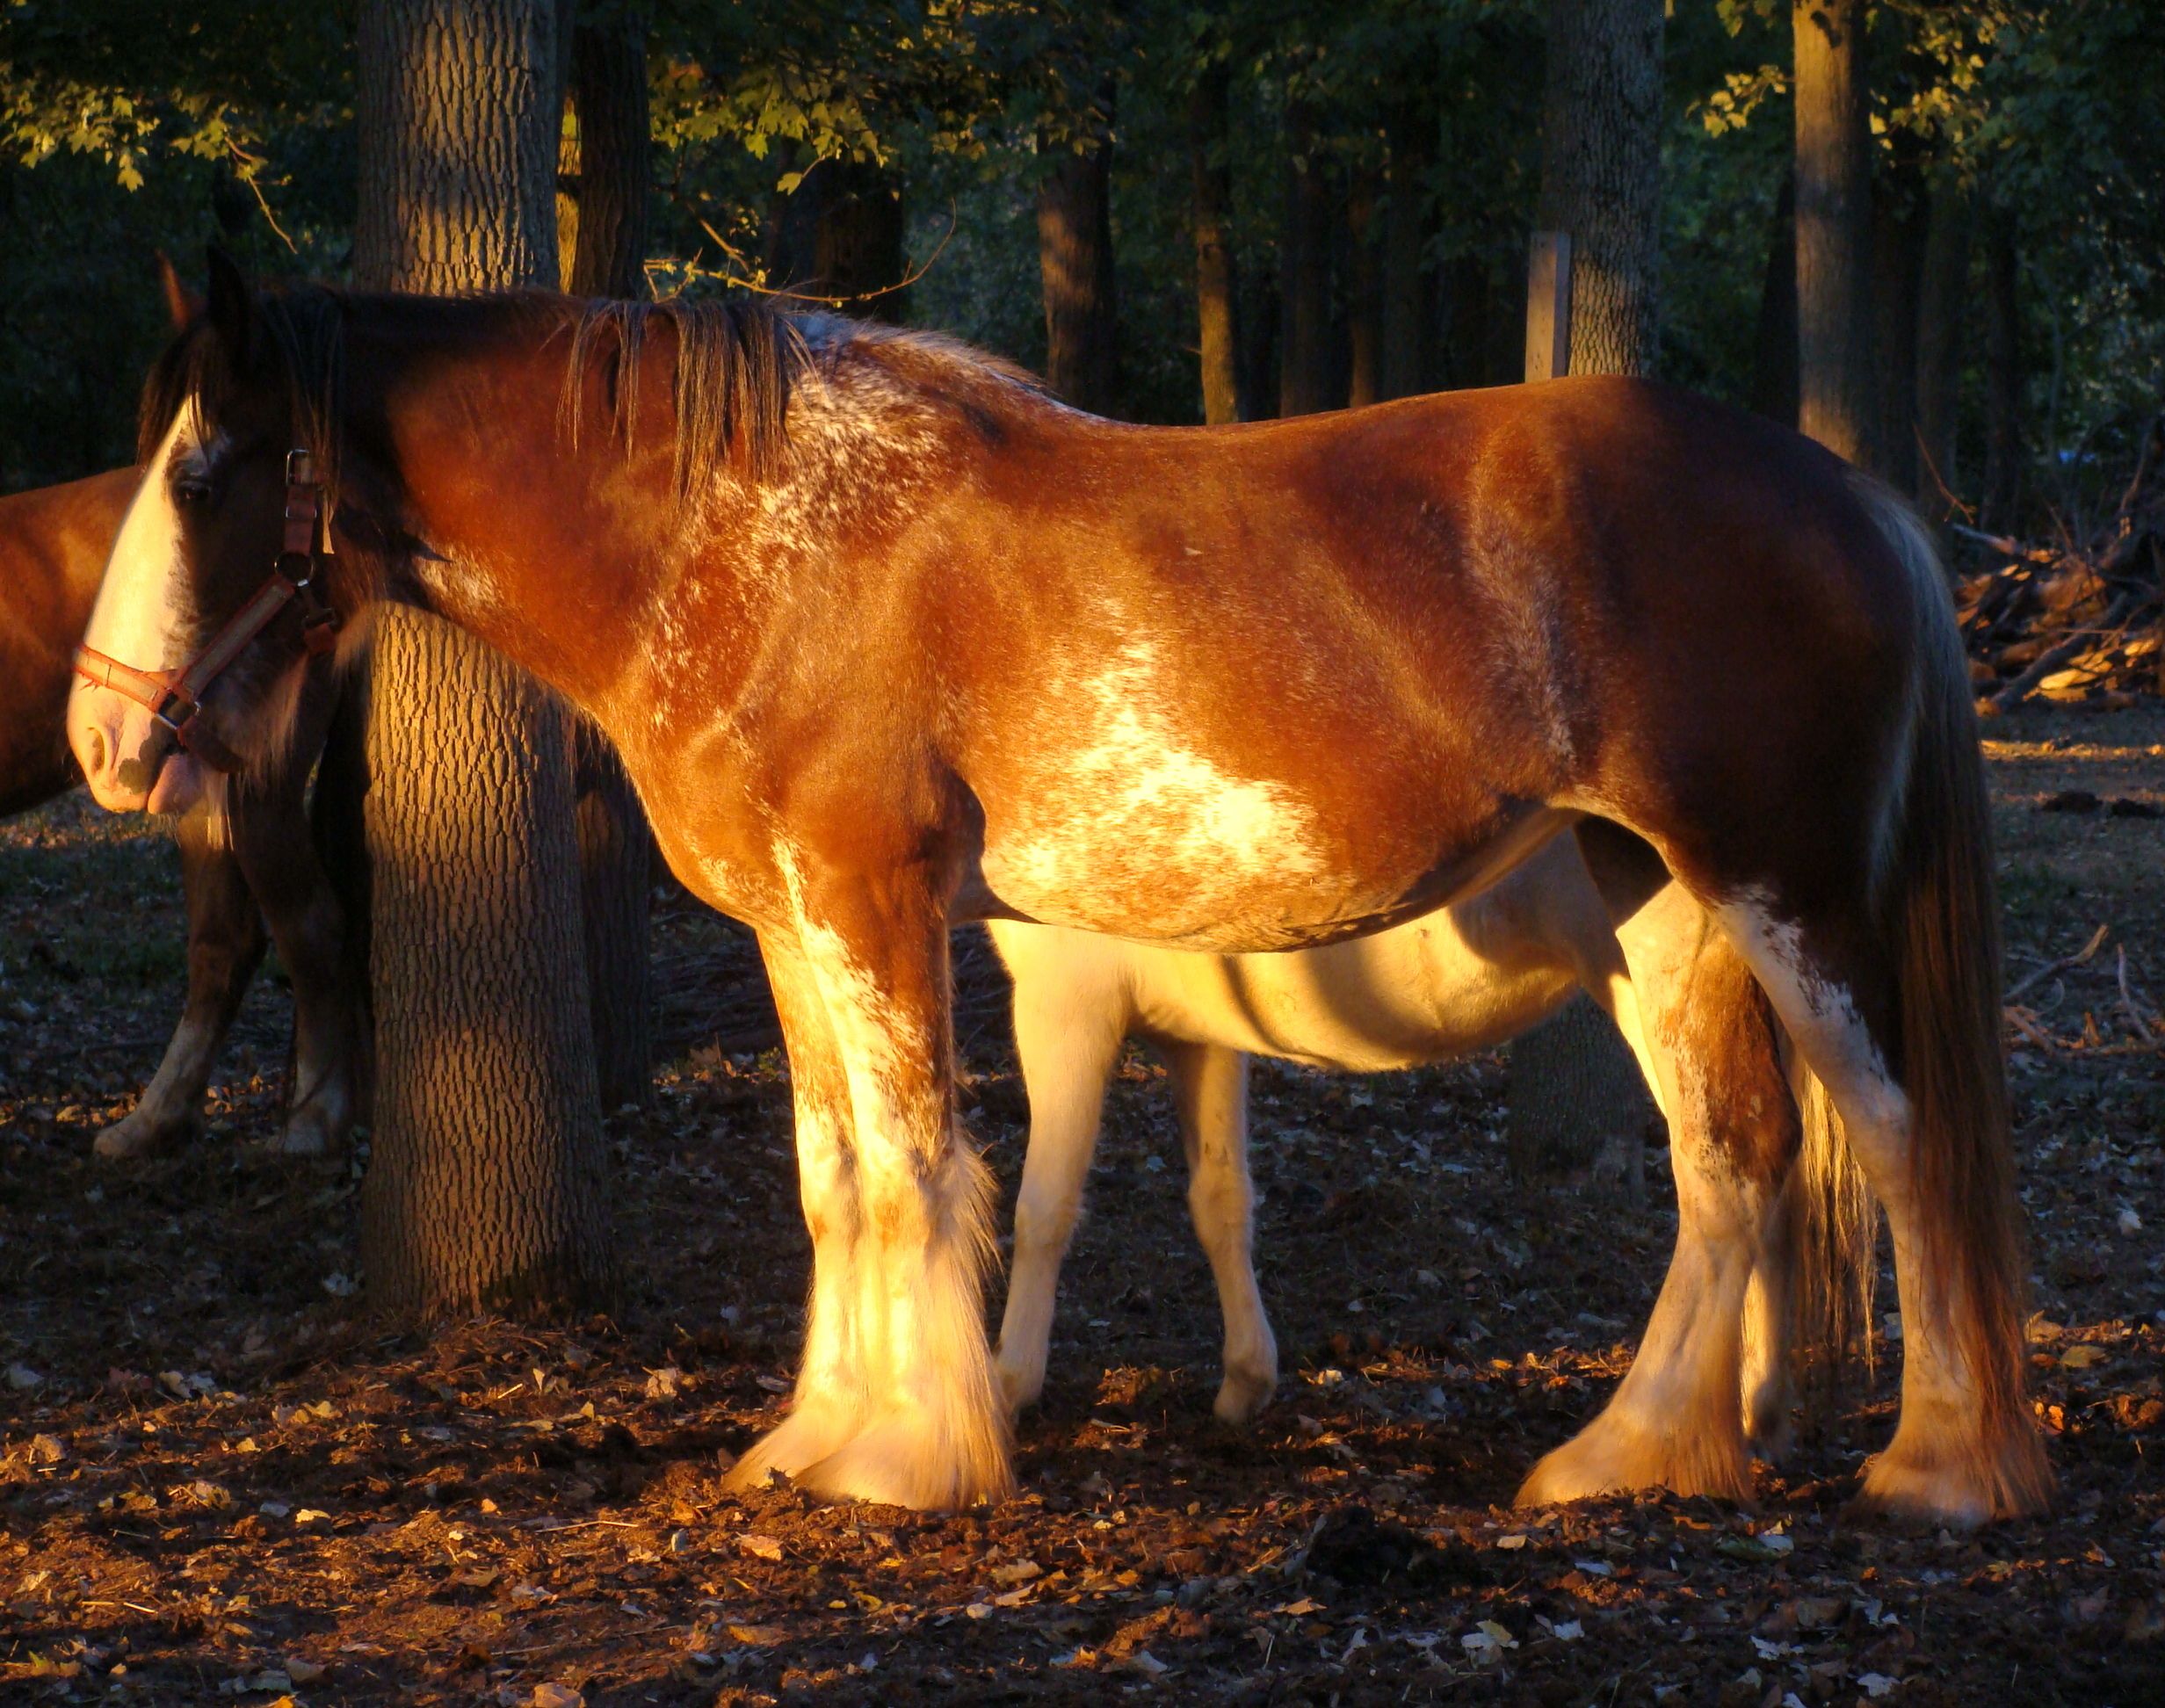 Clydesdales of D'archangel Farm | Horses | Pinterest | Horse ...